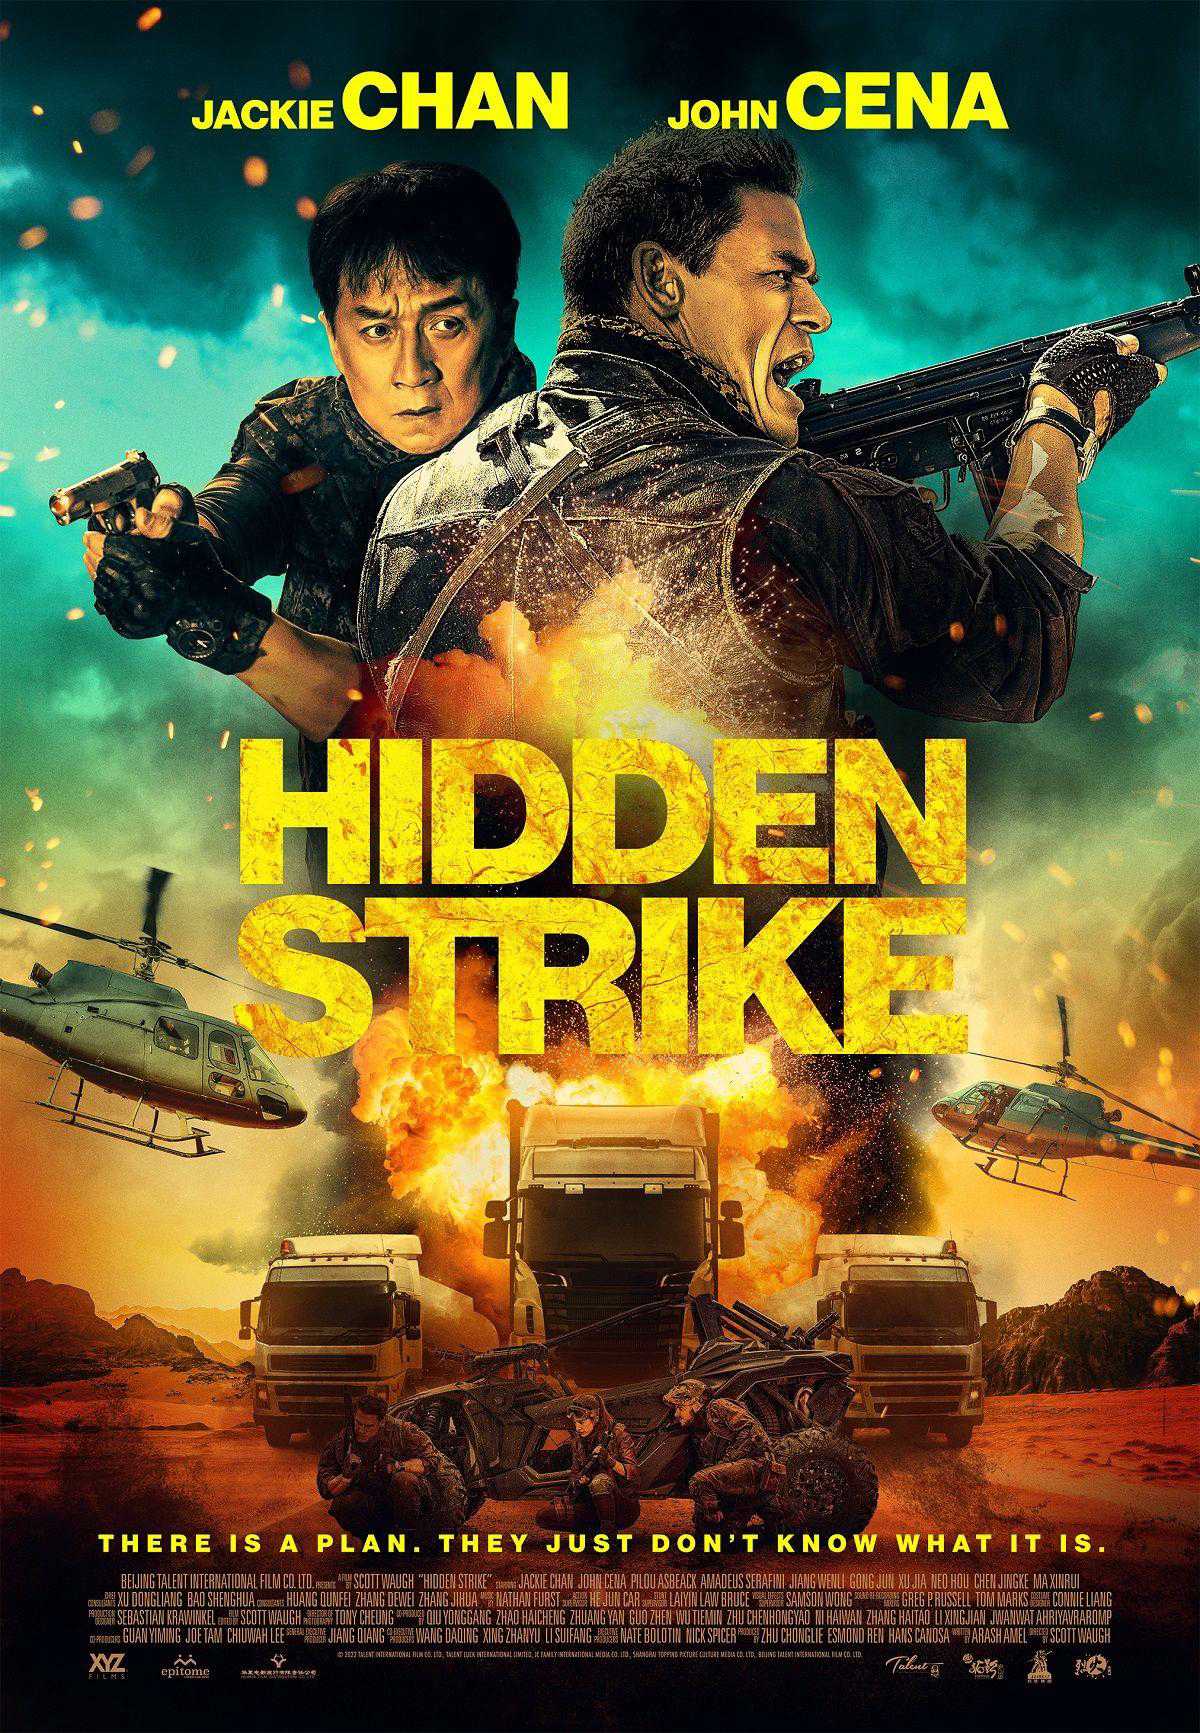 Hidden strike - Hidden strike